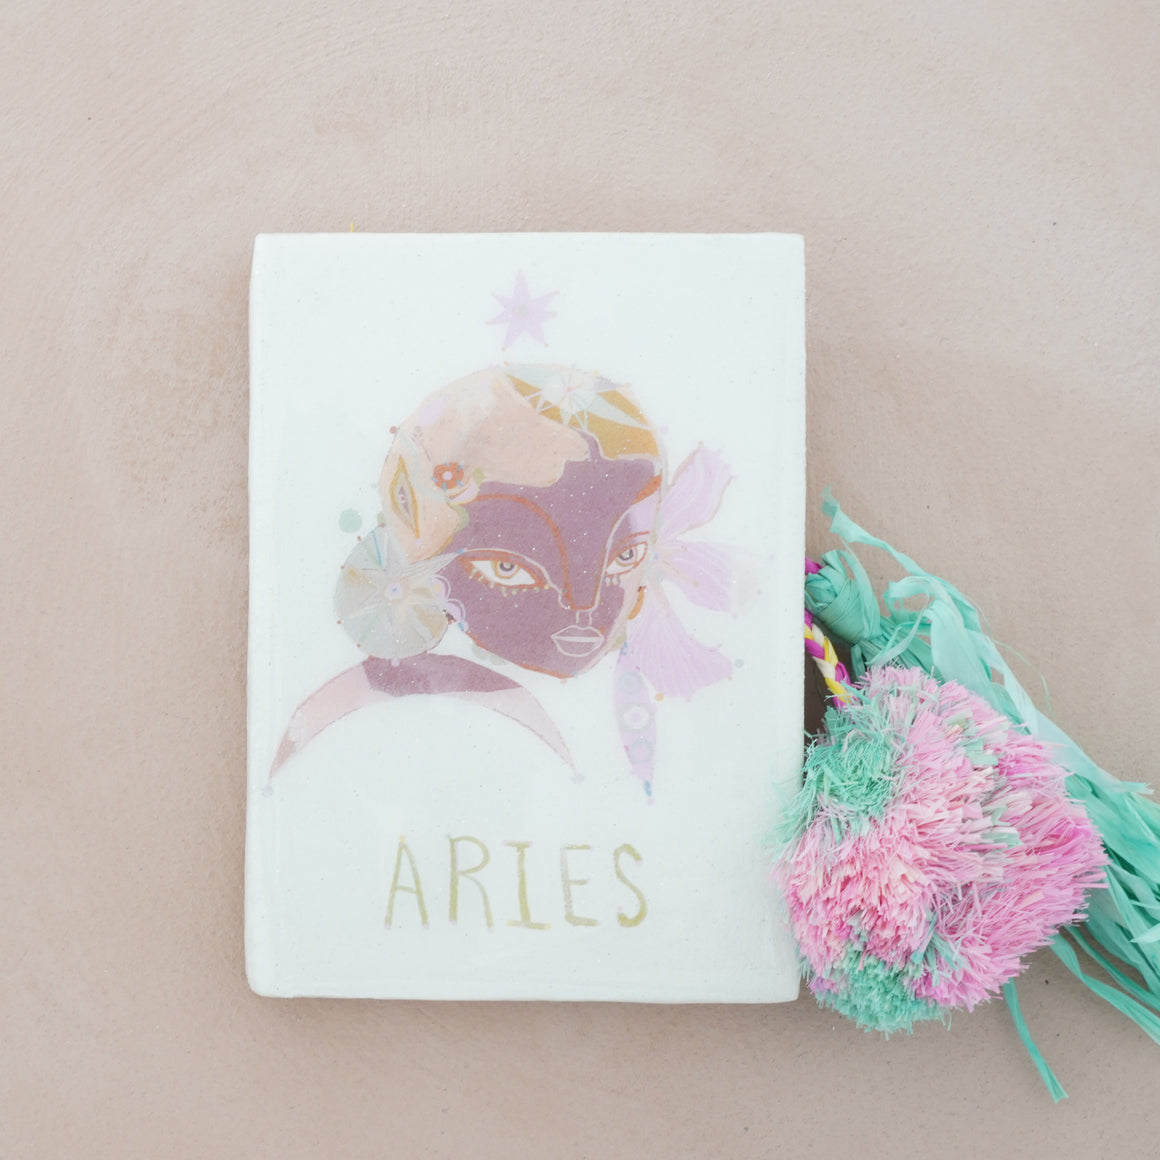 Aries Star Tile